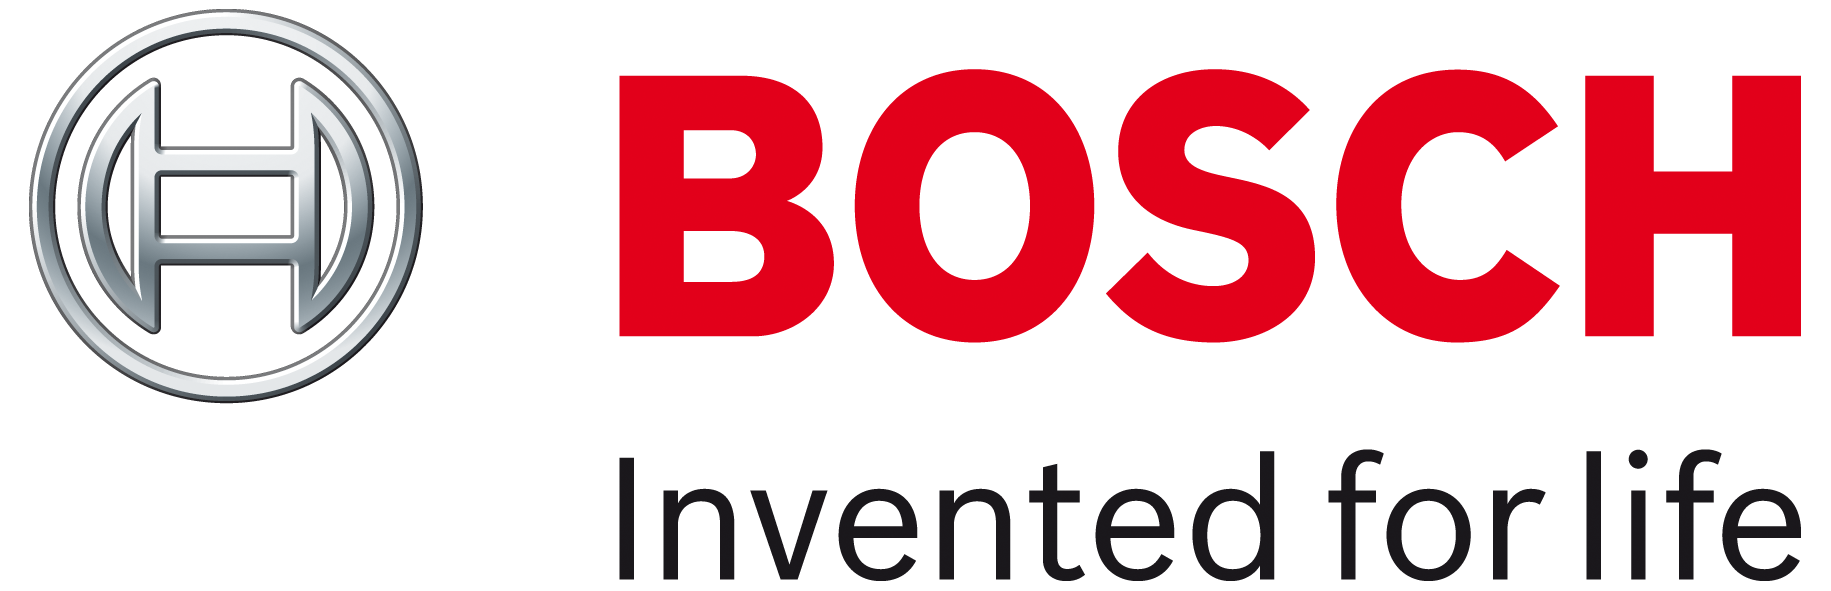 Robert bosh logo